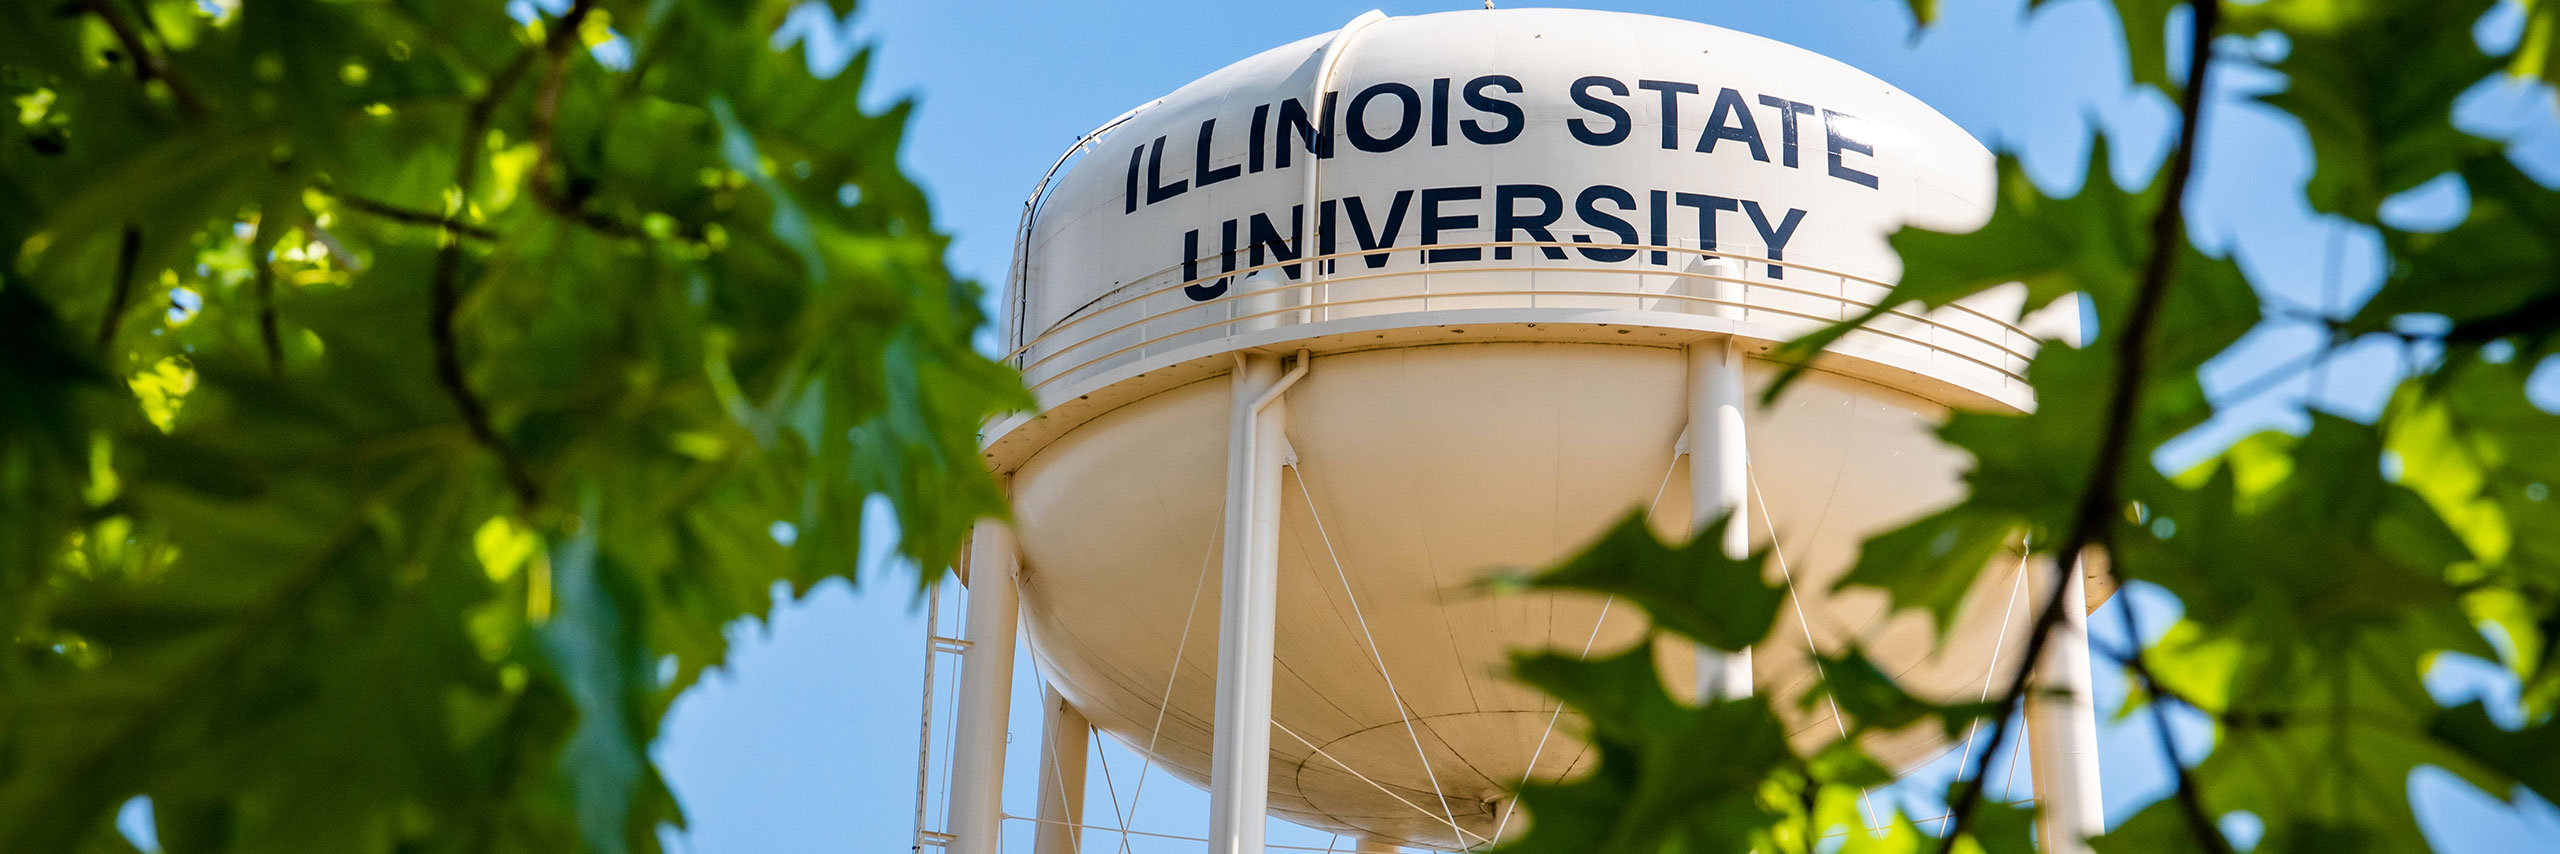 Illinois State University water tower